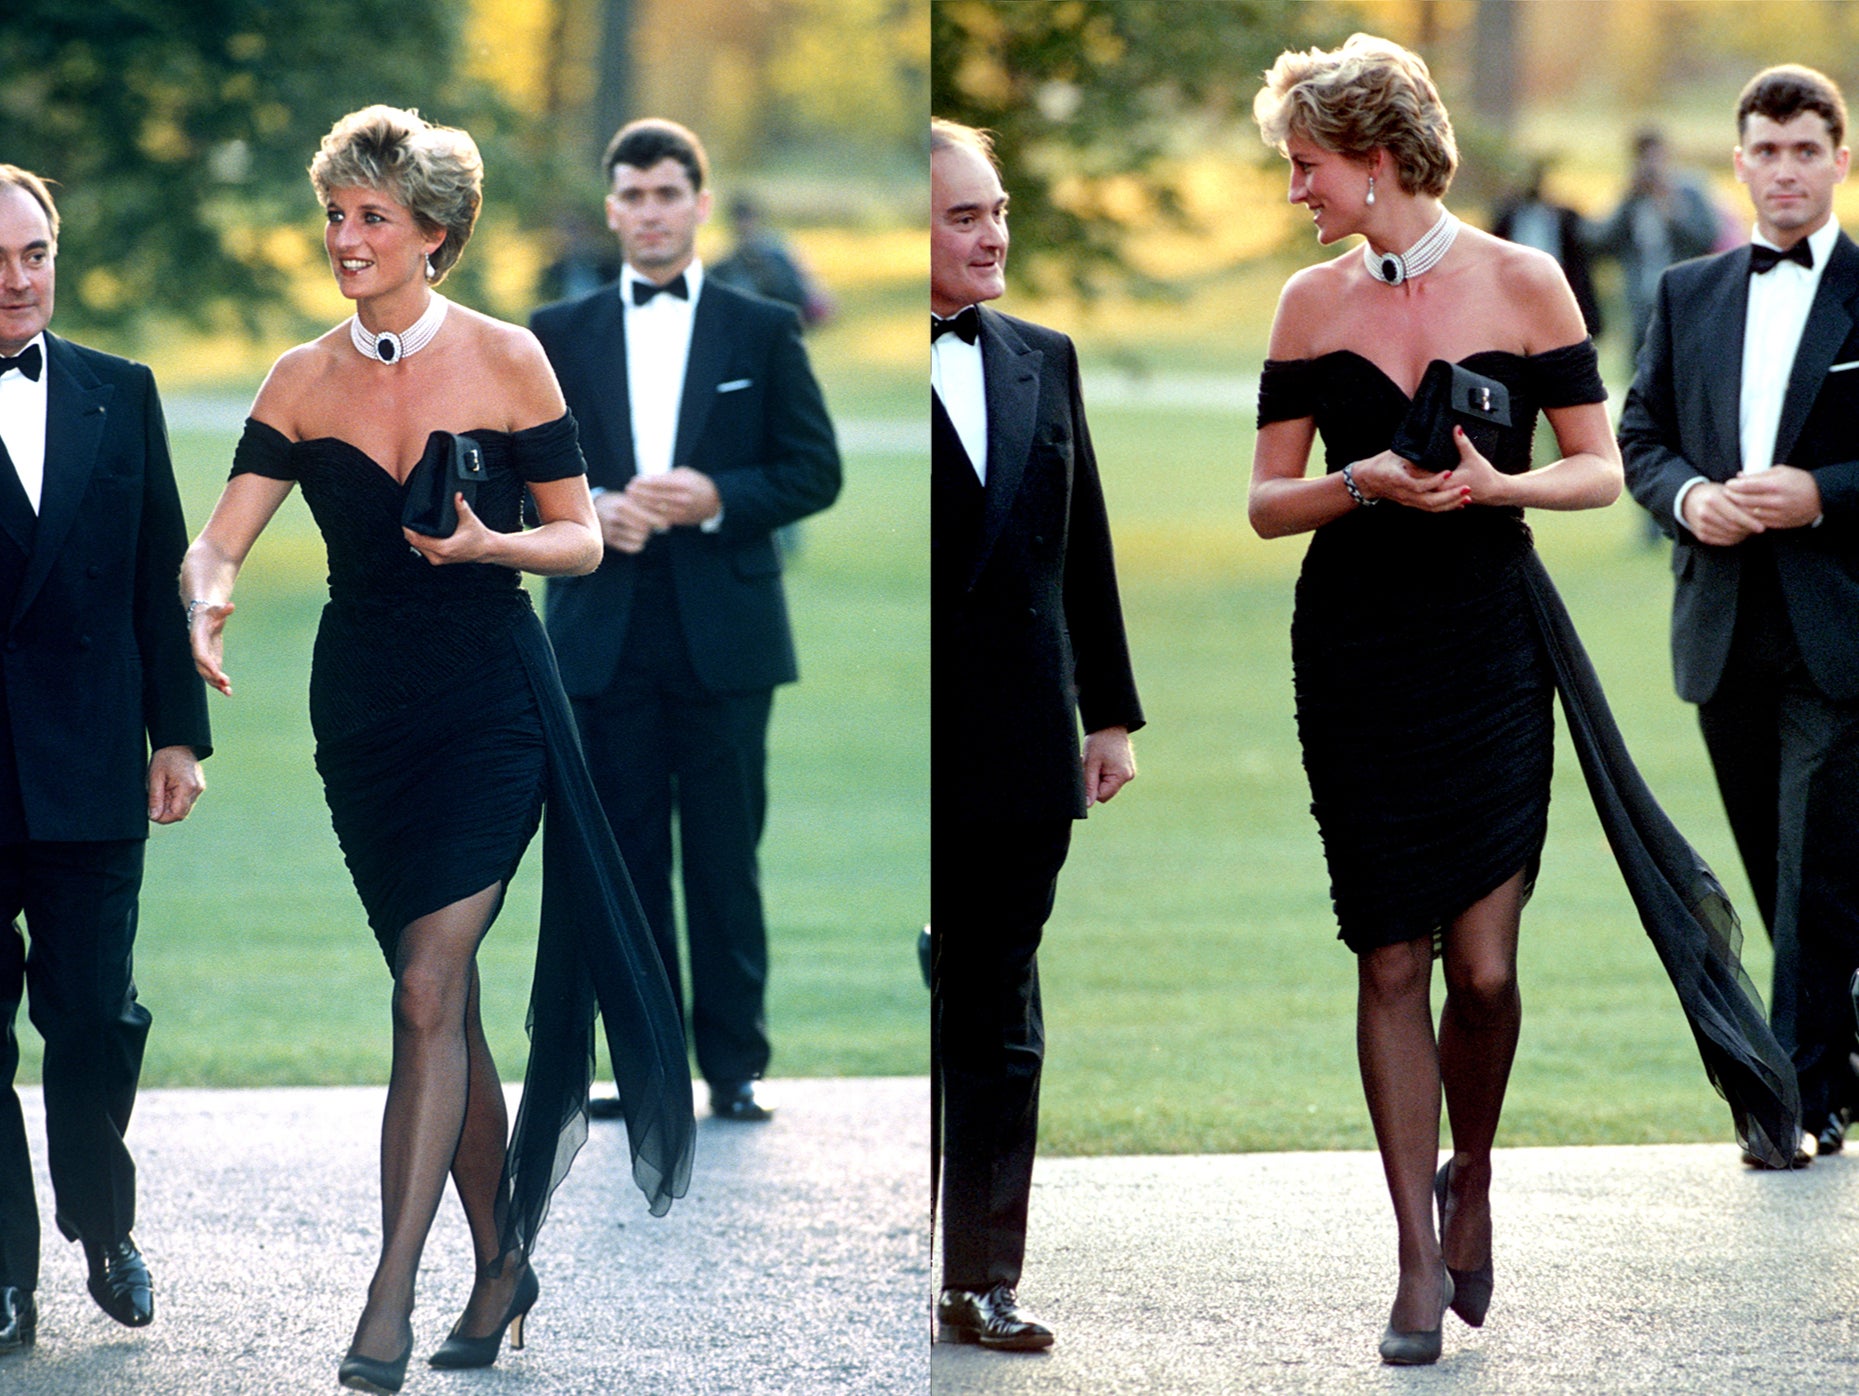 The Crown's Princess Diana Debuts “Revenge Dress” in New Season 5 Photo |  Vanity Fair